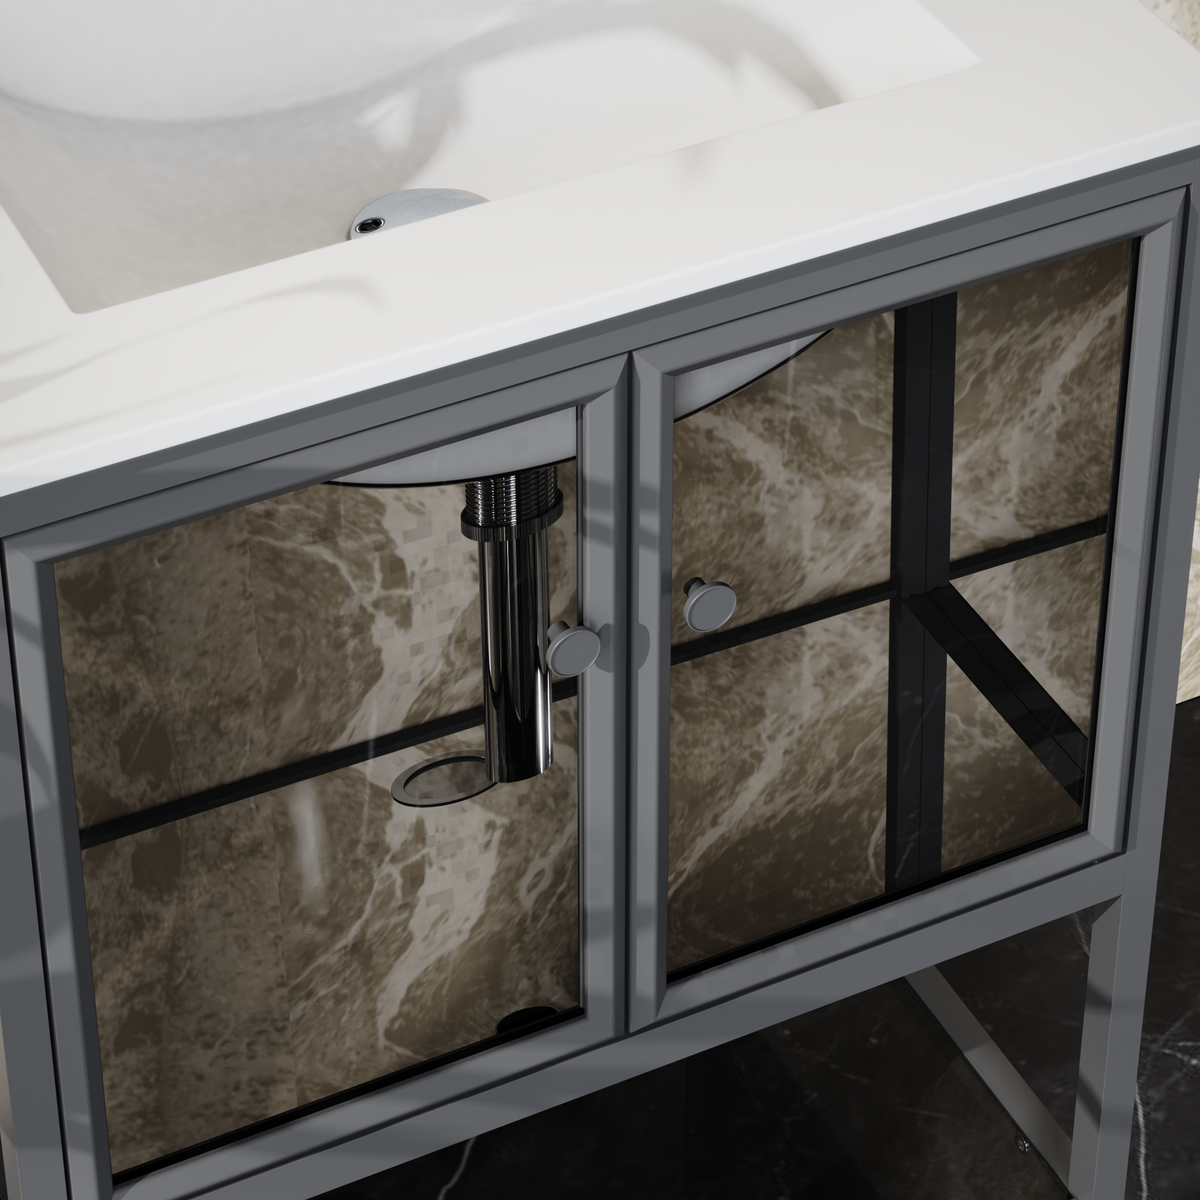 Goodyo® 24” Bathroom Vanity with Sink Combo Freestanding Vanity Cabinet Grey